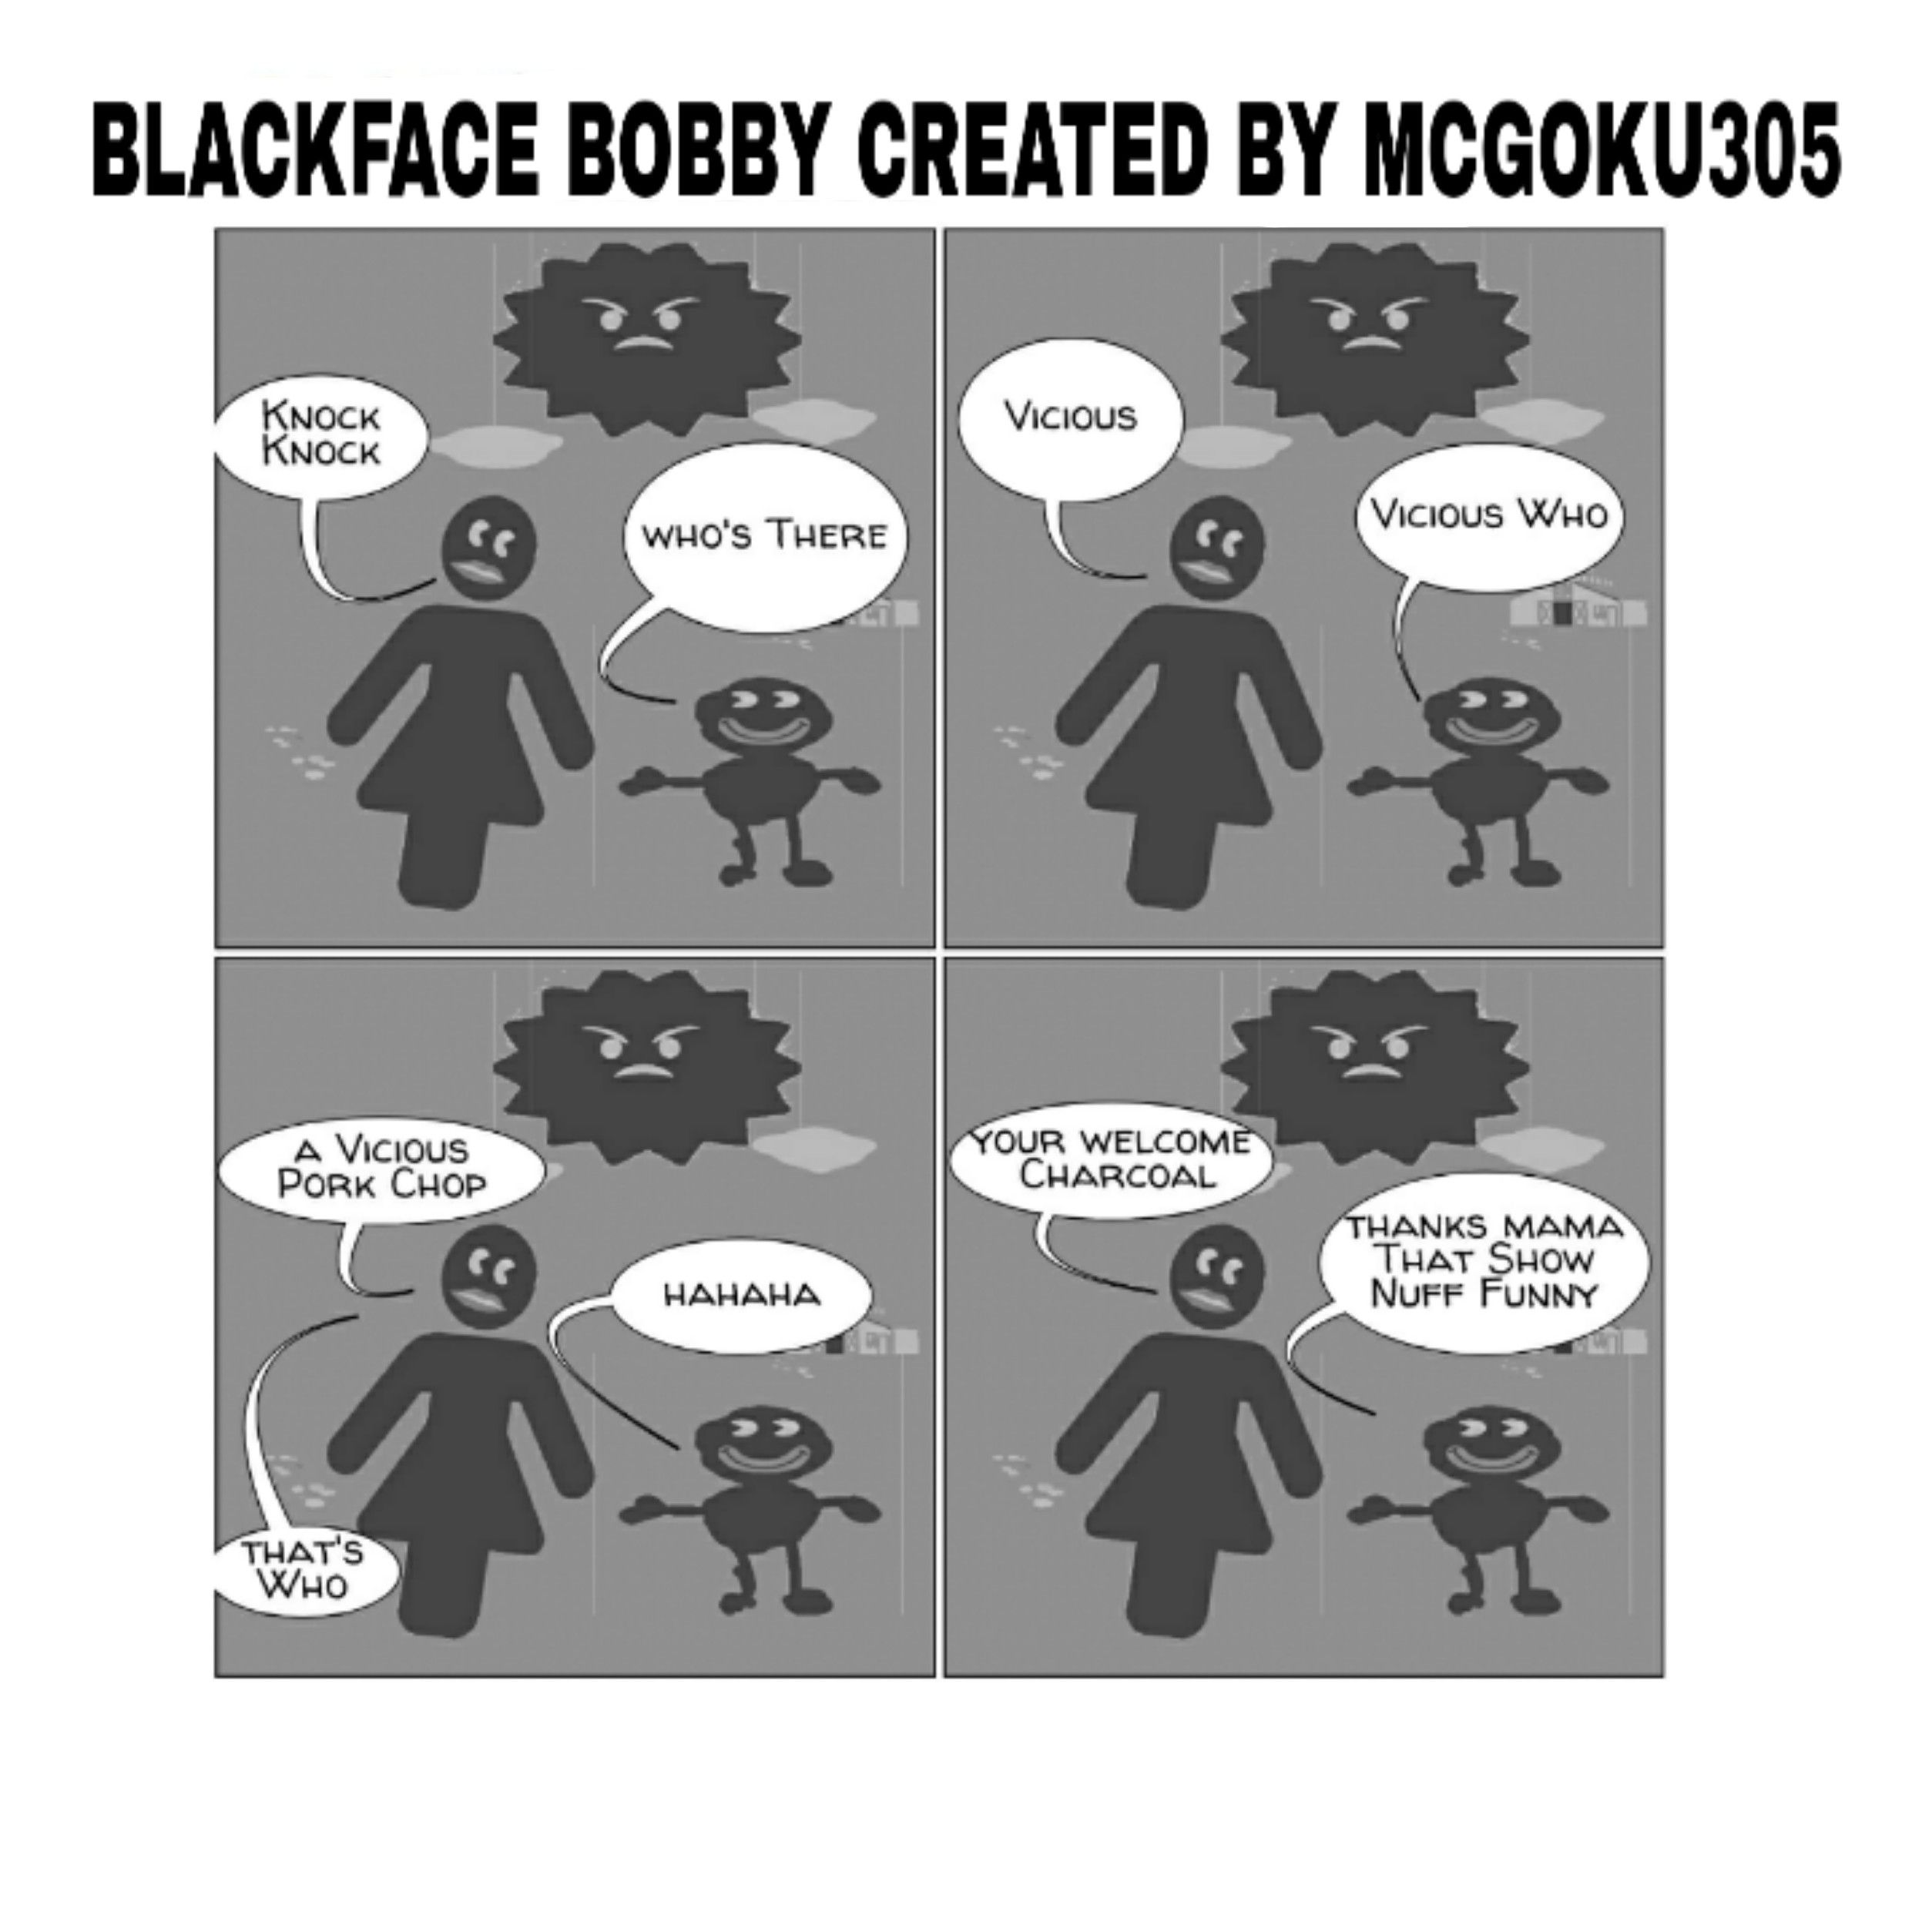 BLACKFACE BOBBY AND MOTHER BLACKFACE KNOCK KNOCK JOKES #COMICS